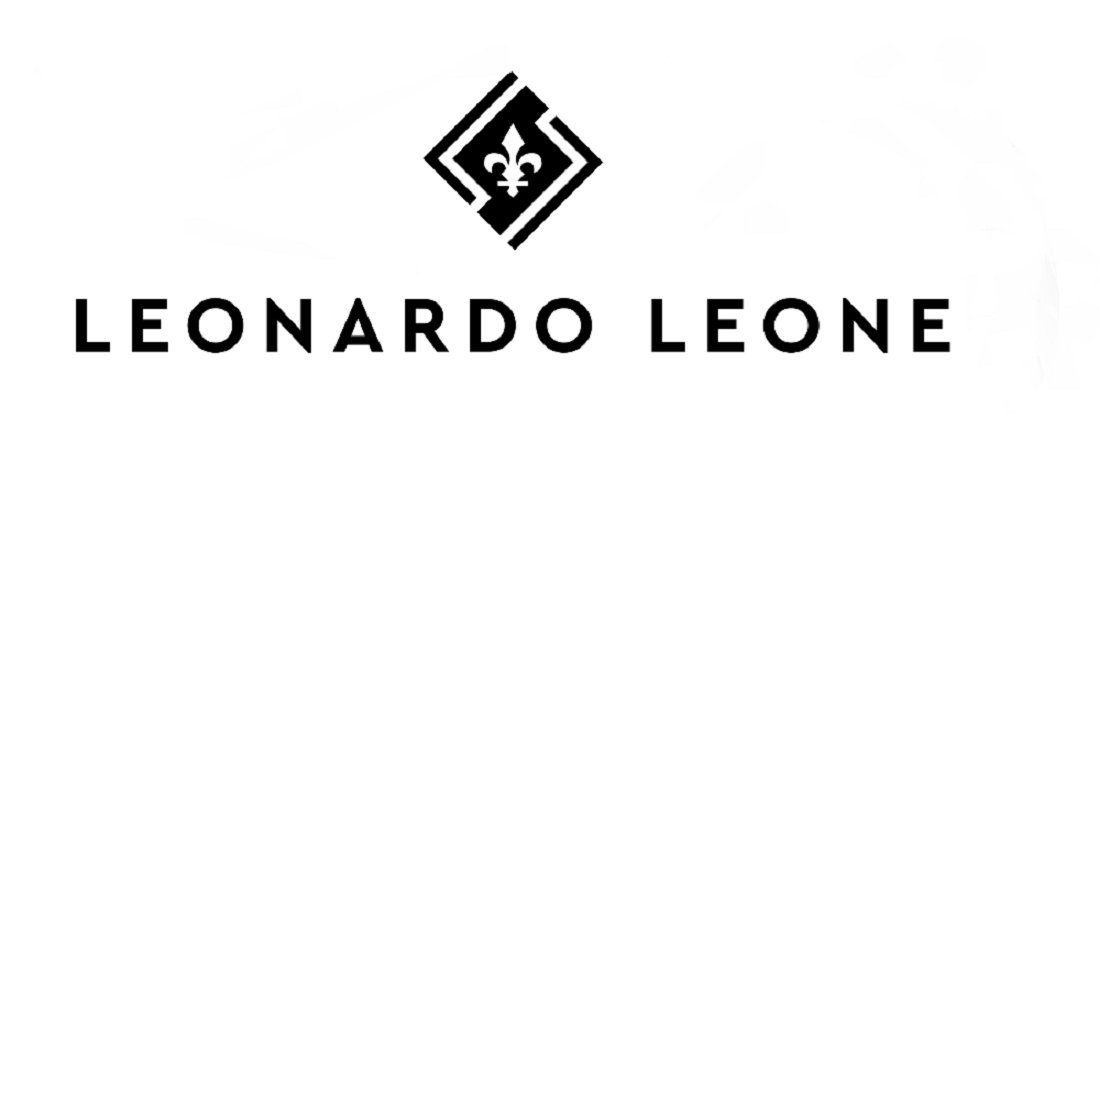 Leonardo Leone